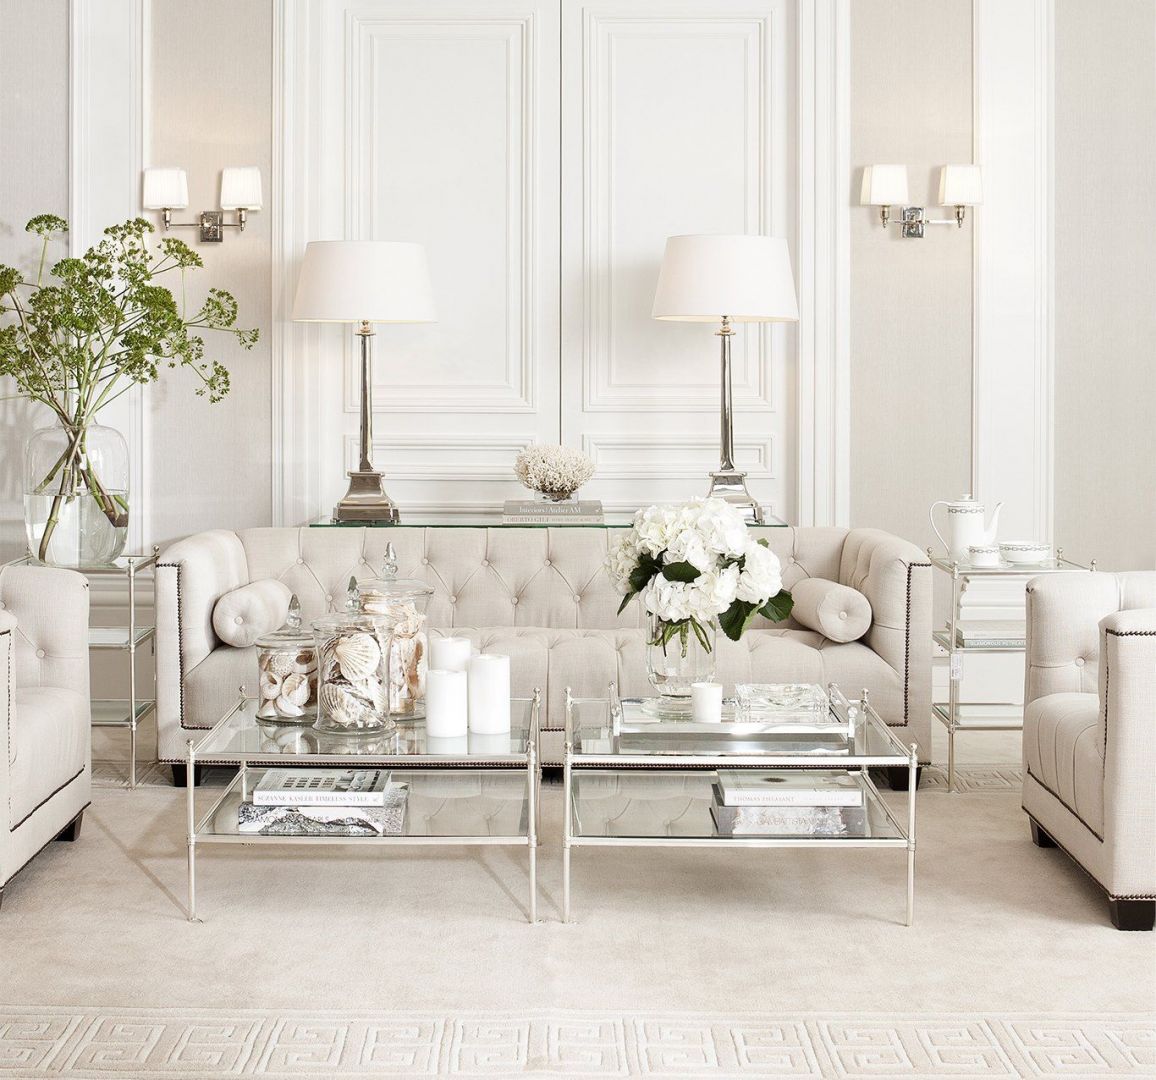 Pikowana sofa i delikatne szklane stoliki pasują do stylu glamour. Fot. Clue Studio